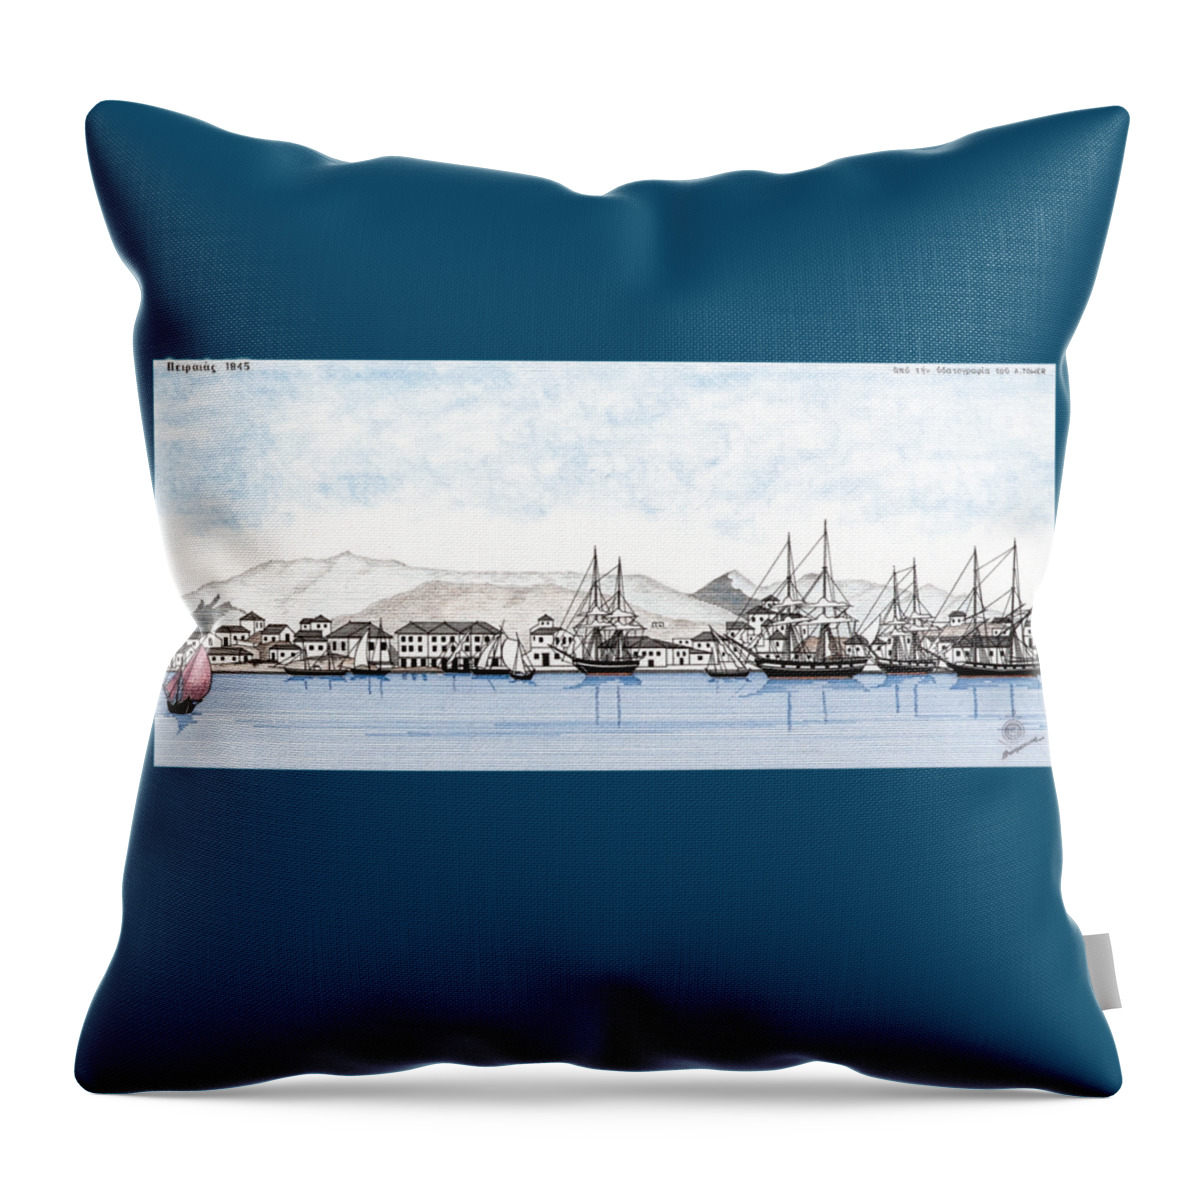 Vintage Throw Pillow featuring the drawing Piraeus 1845 by Panagiotis Mastrantonis